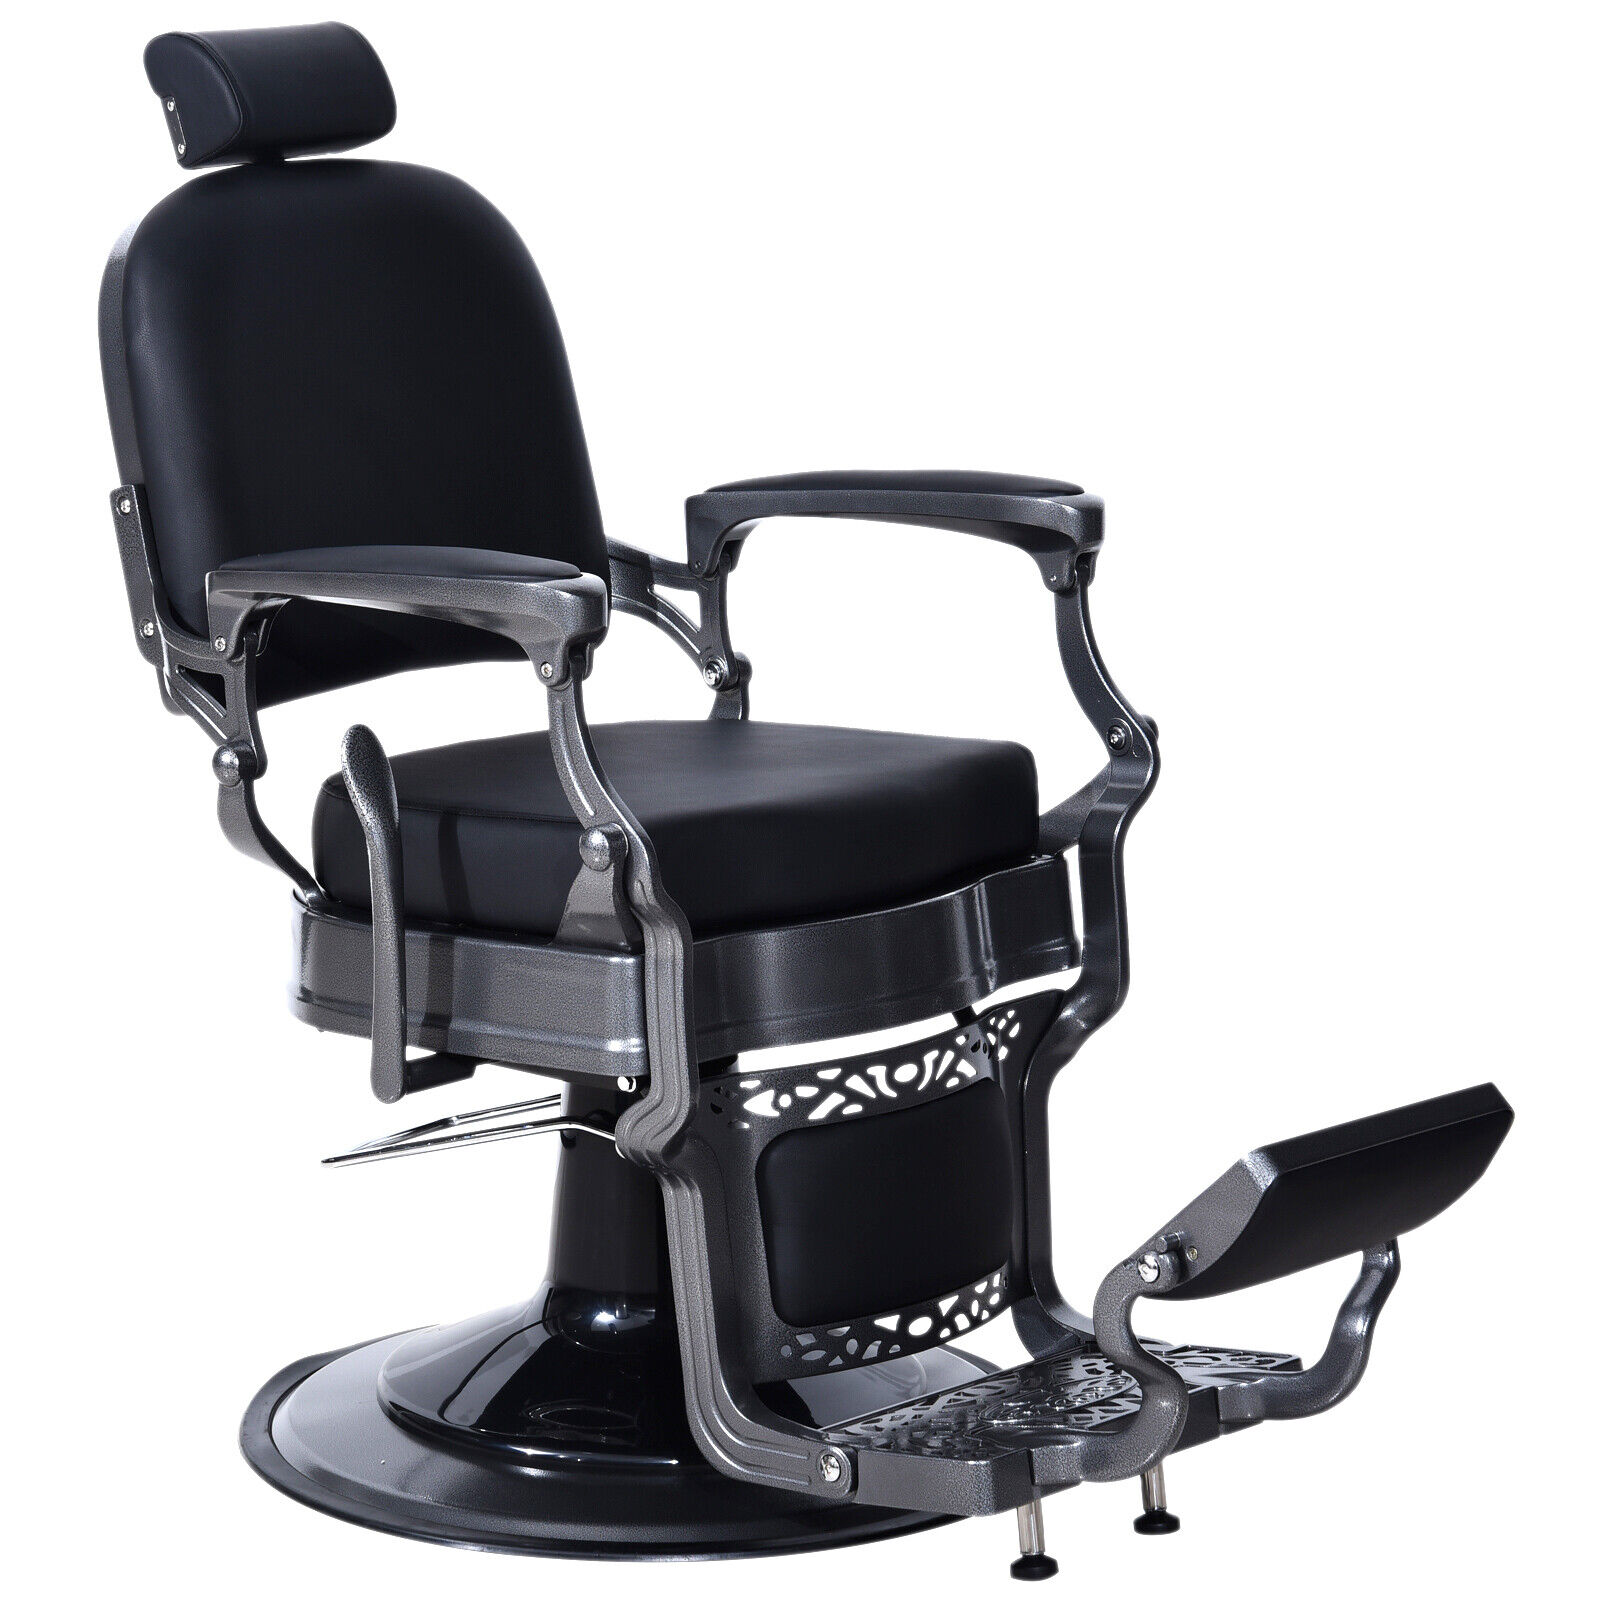 BarberPub Vintage Barber Chair All Purpose Hydraulic Salon Spa Equipment 3850